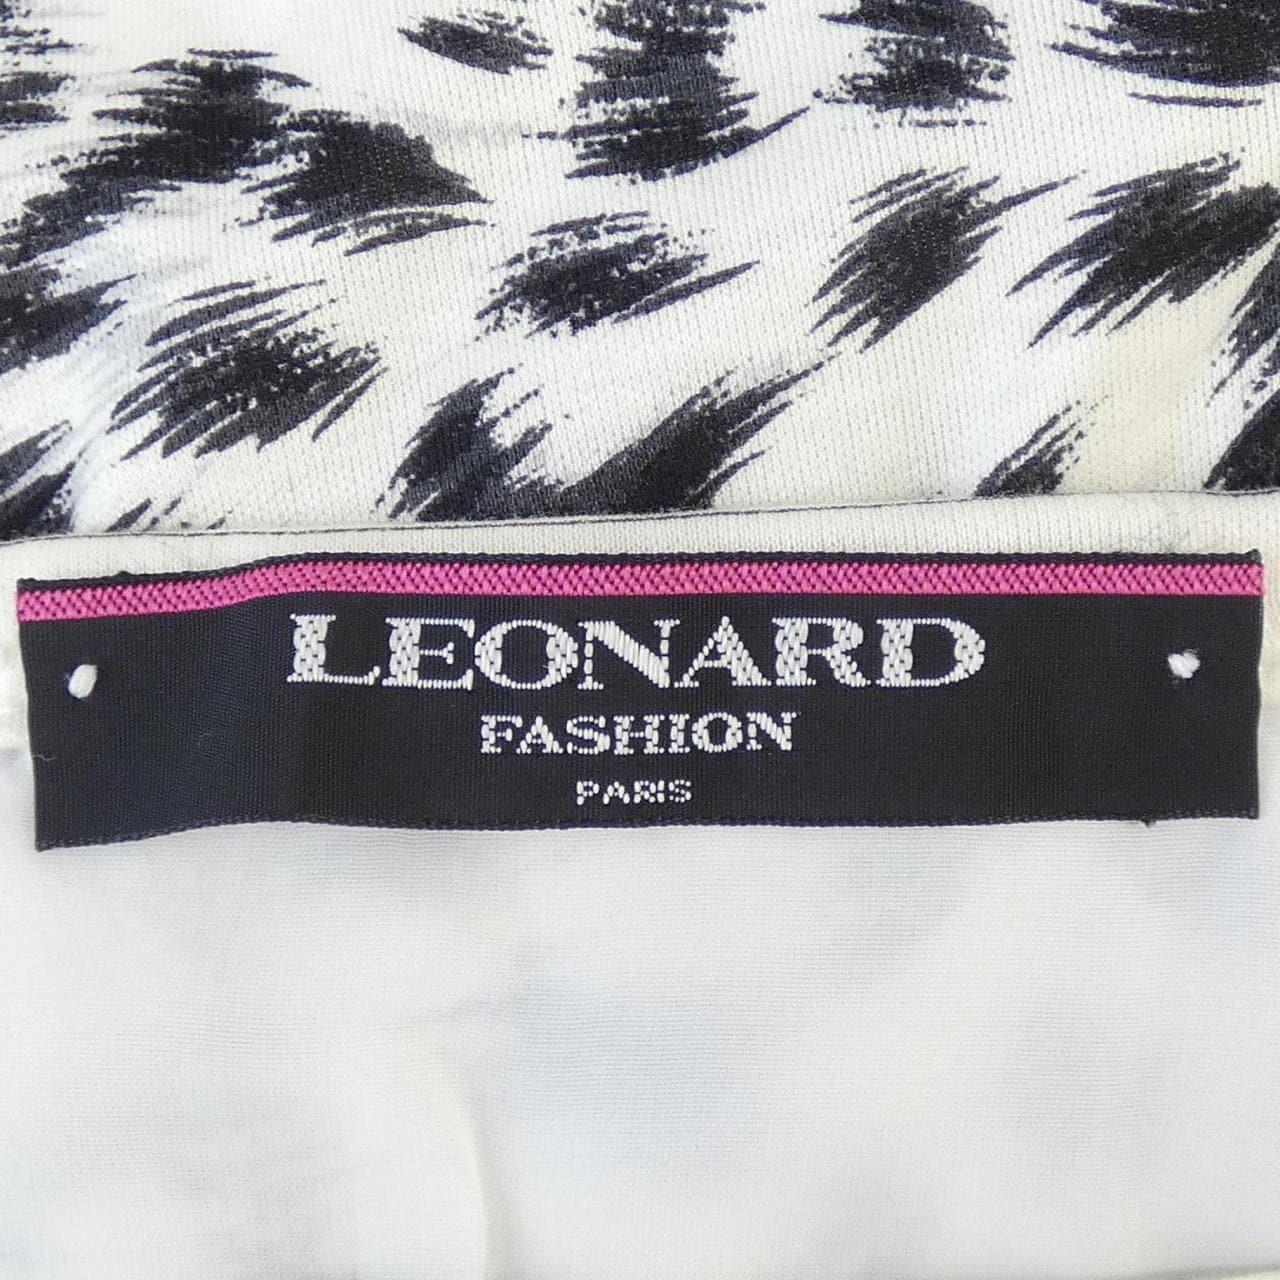 萊昂納多時尚LEONARD FASHION套裝